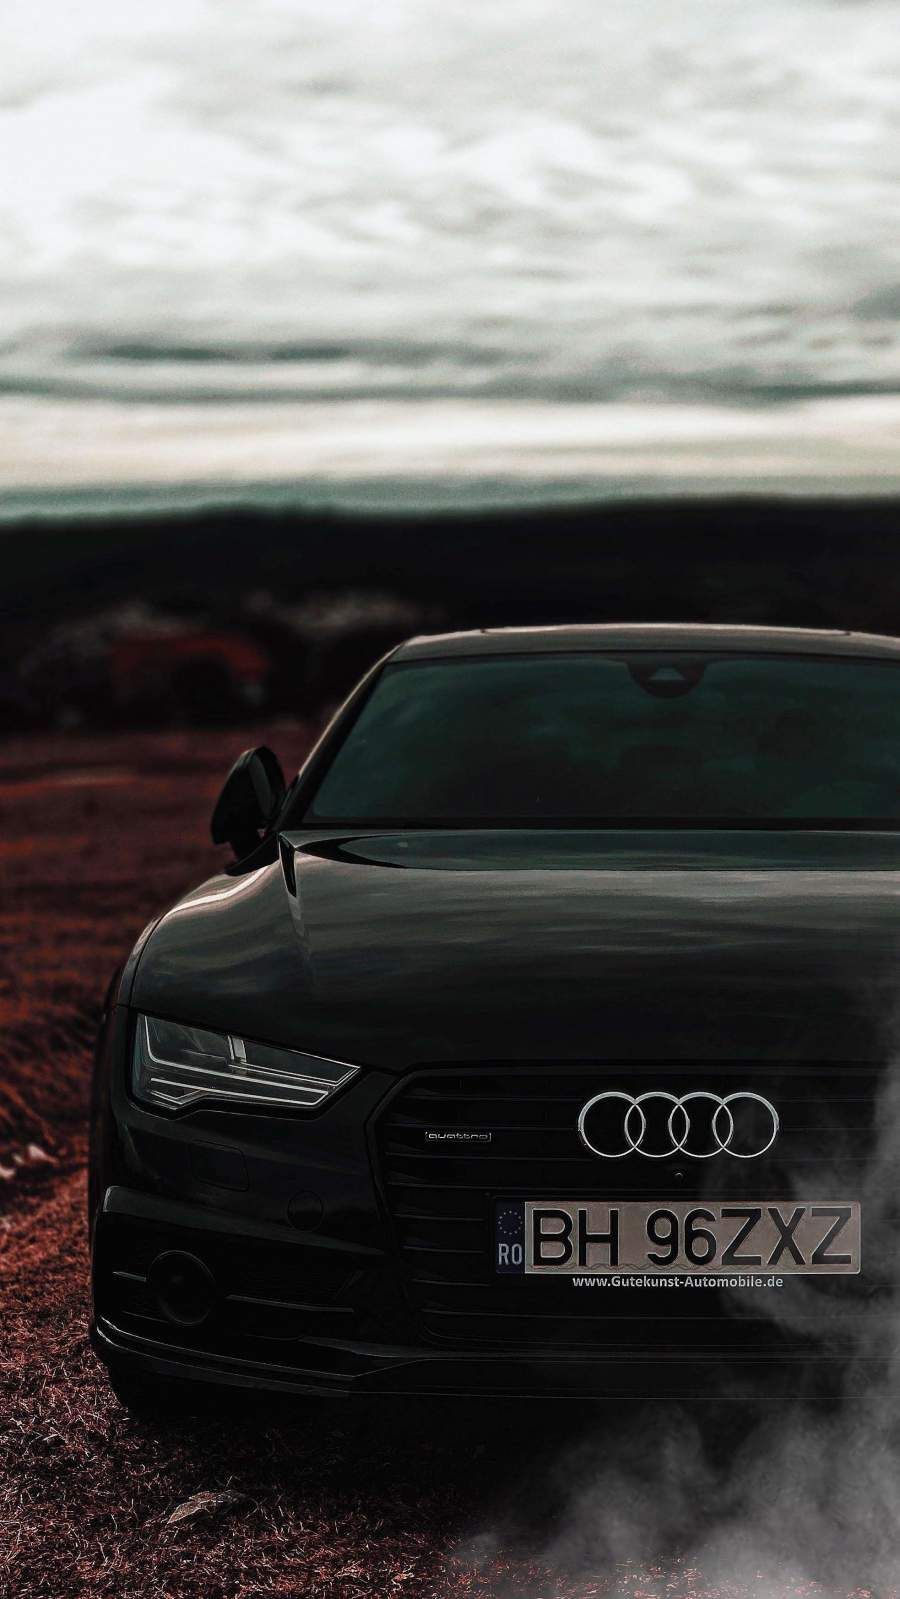 Audi Xr Wallpapers